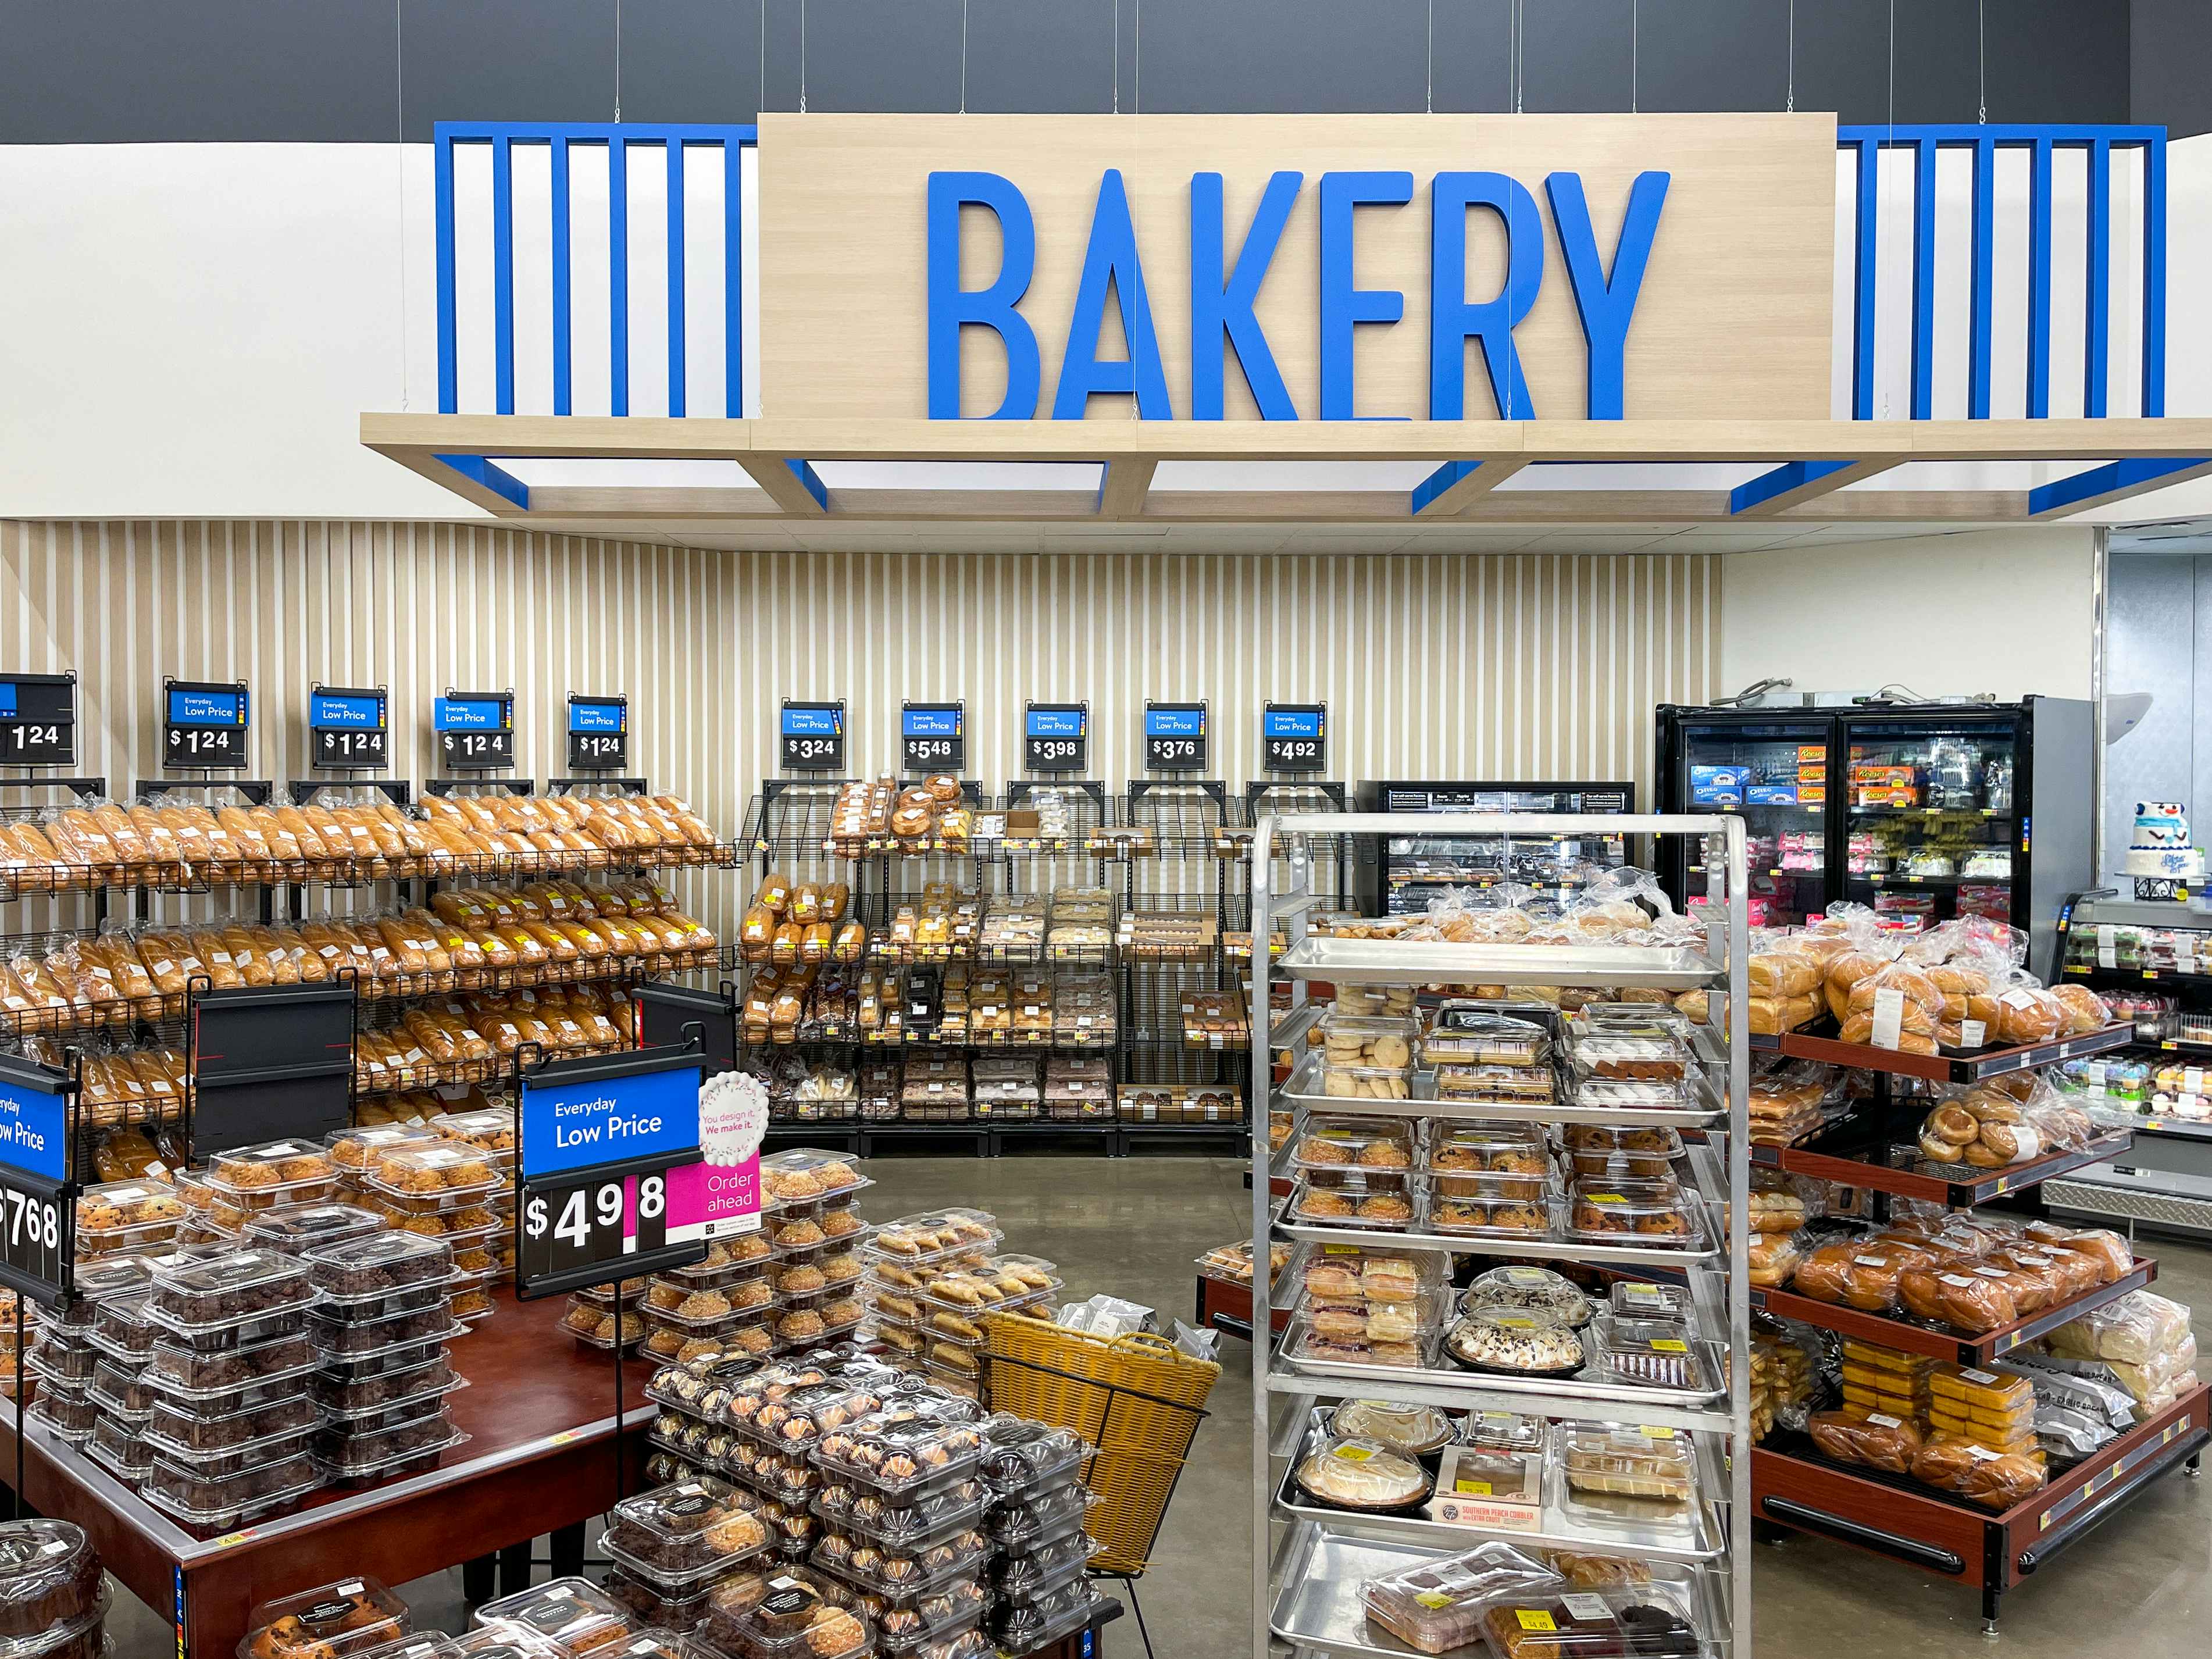 The Walmart bakery area